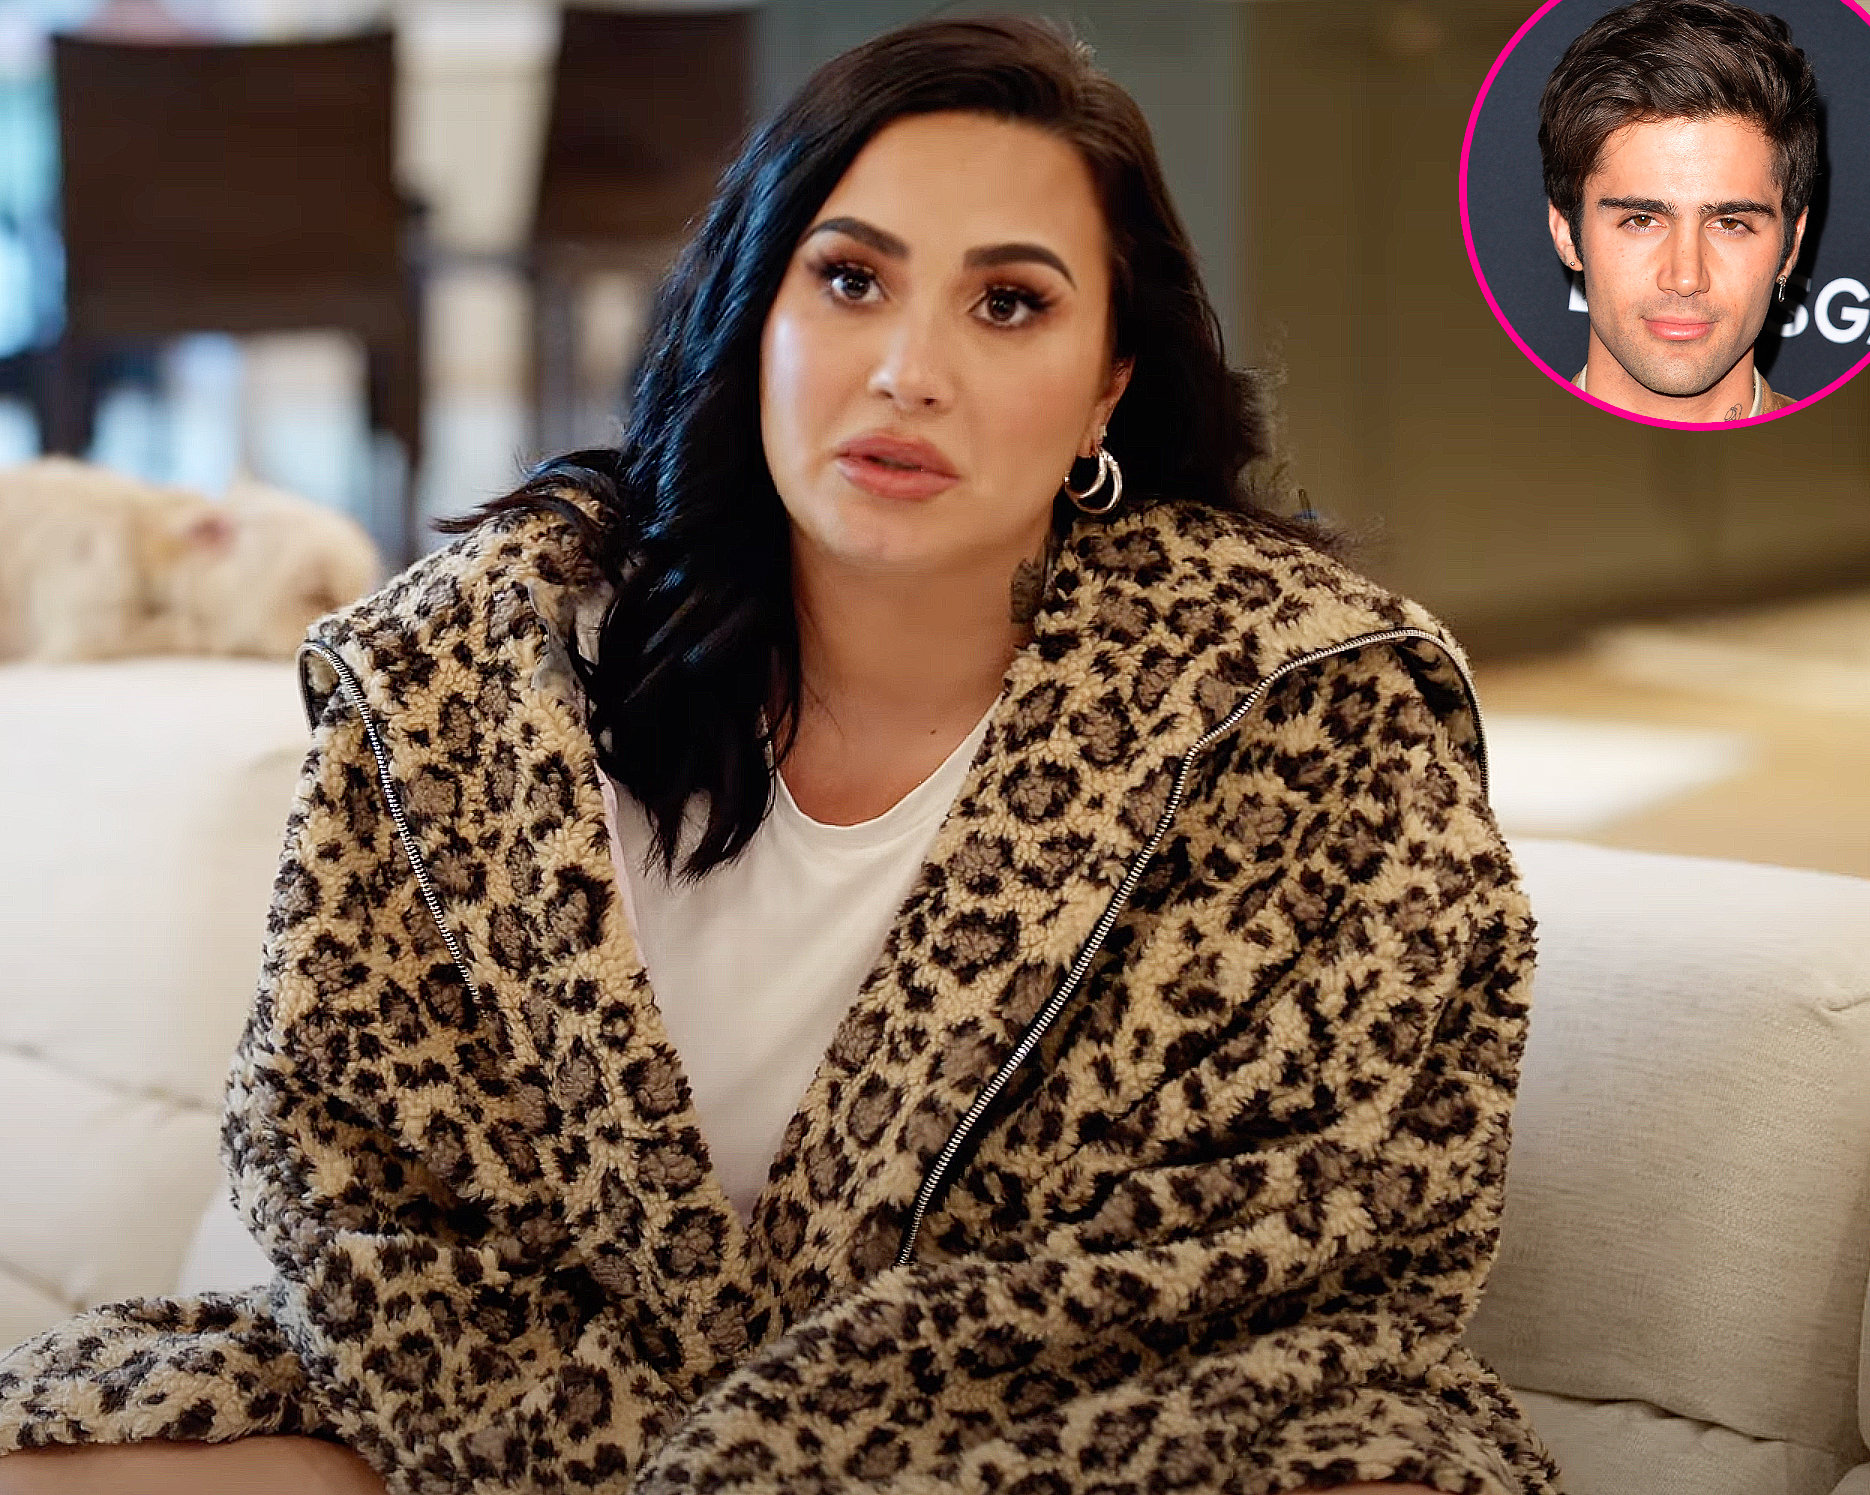 Celeb Porn Demi Lovato - Demi Lovato Shares What Happened With Ex Max Ehrich in New Doc